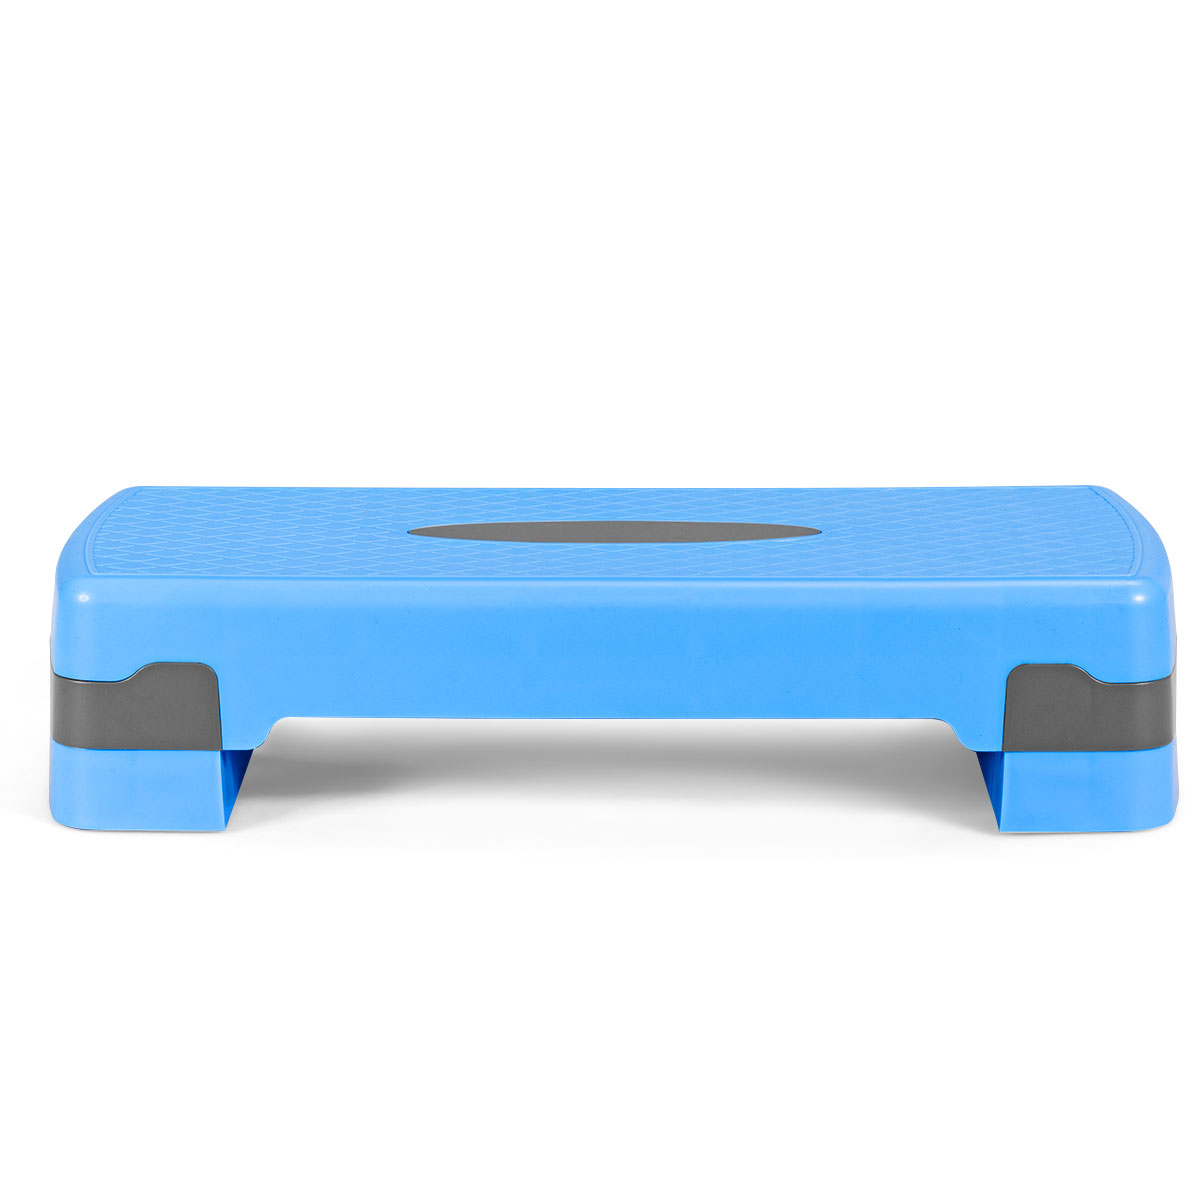 Topbuy Exercise Stepper Height Adjustable Aerobic Step Platform Blue